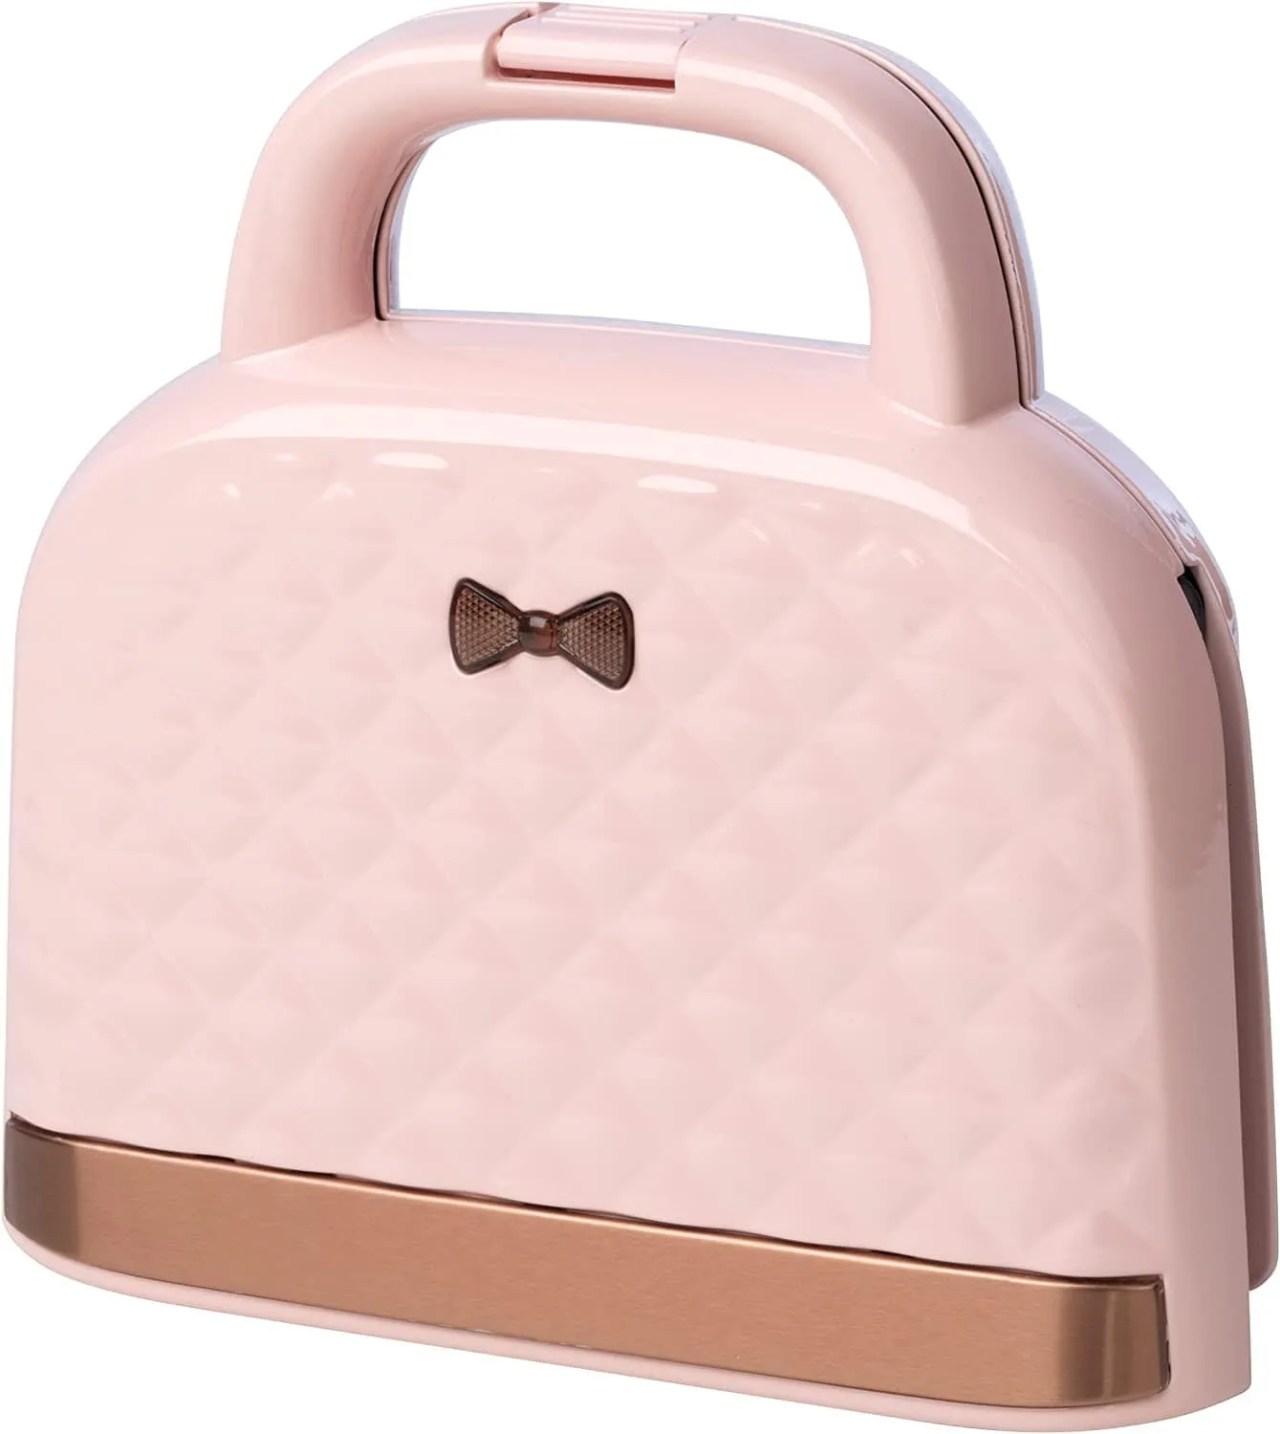 pink sandwich maker in the shape of a handbag